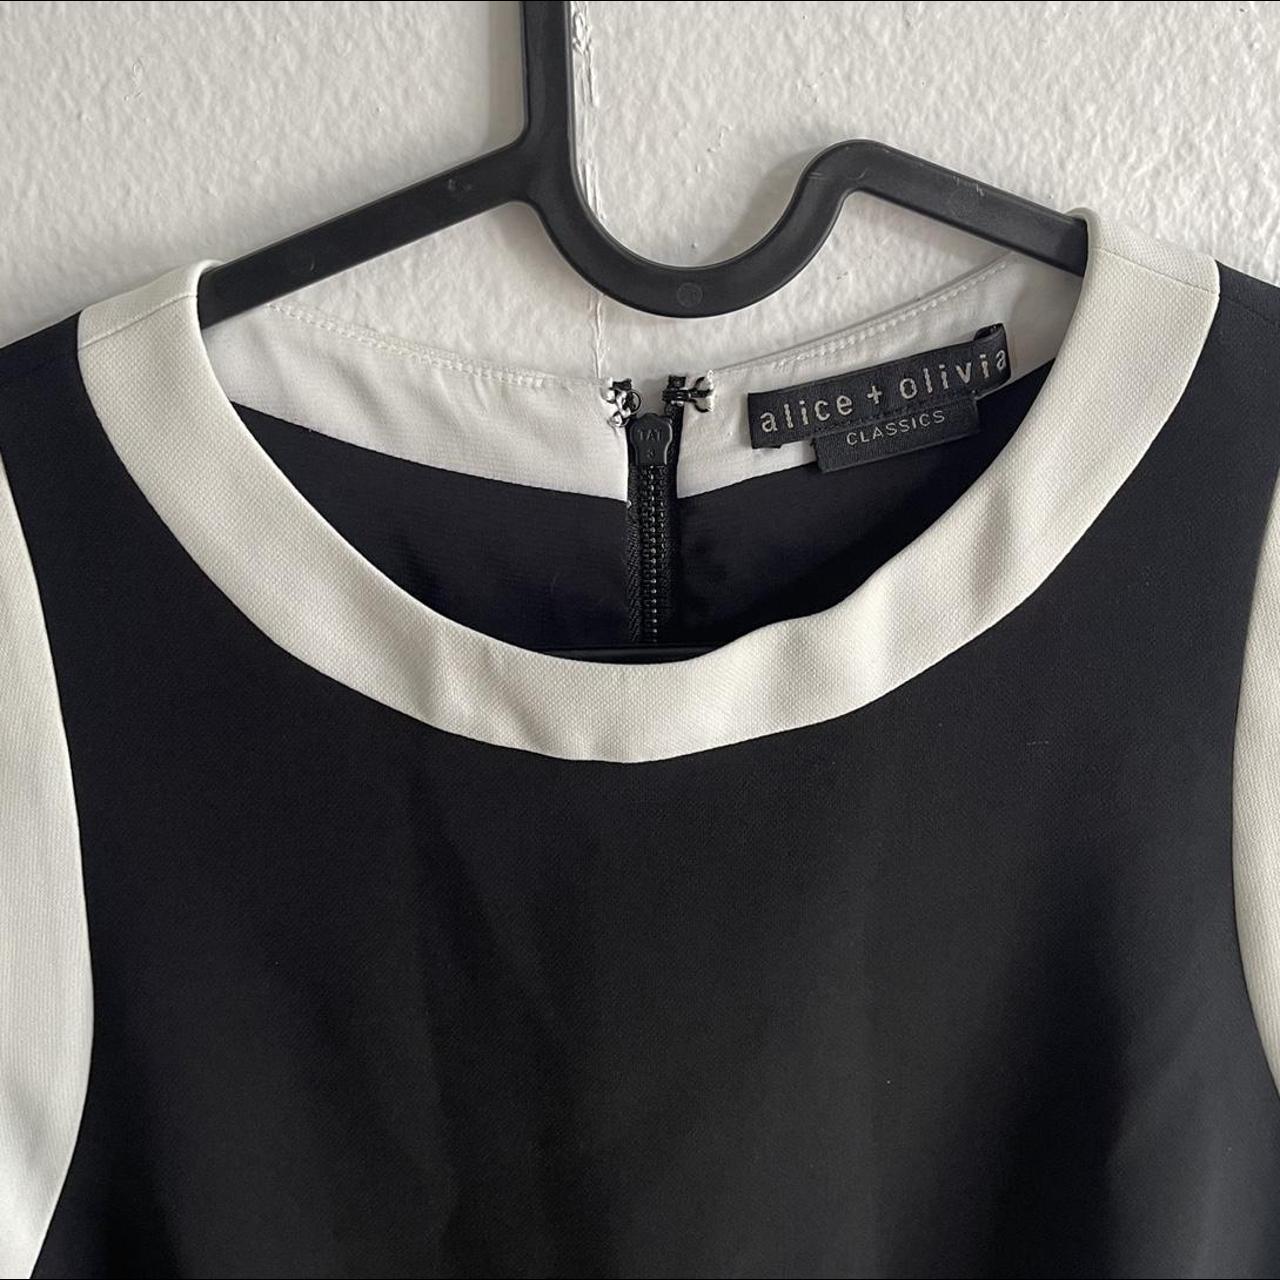 alice + olivia Women's Black and White Dress (4)